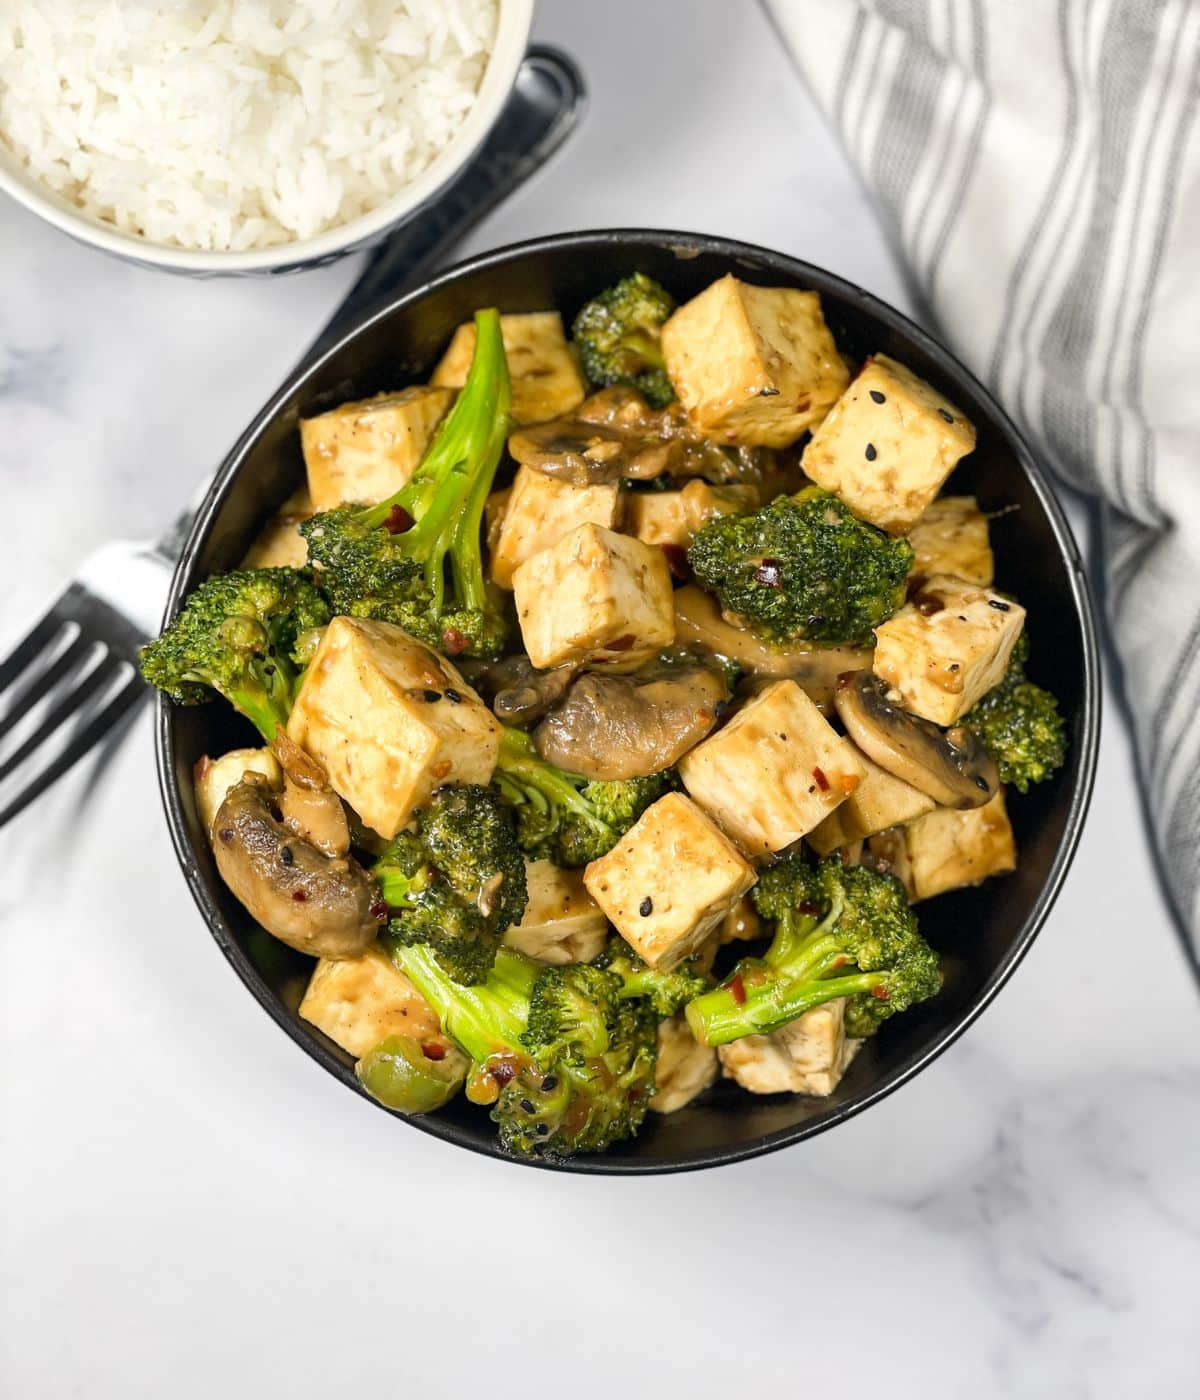 A bowl is full of tofu broccoli mushroom stir fry.